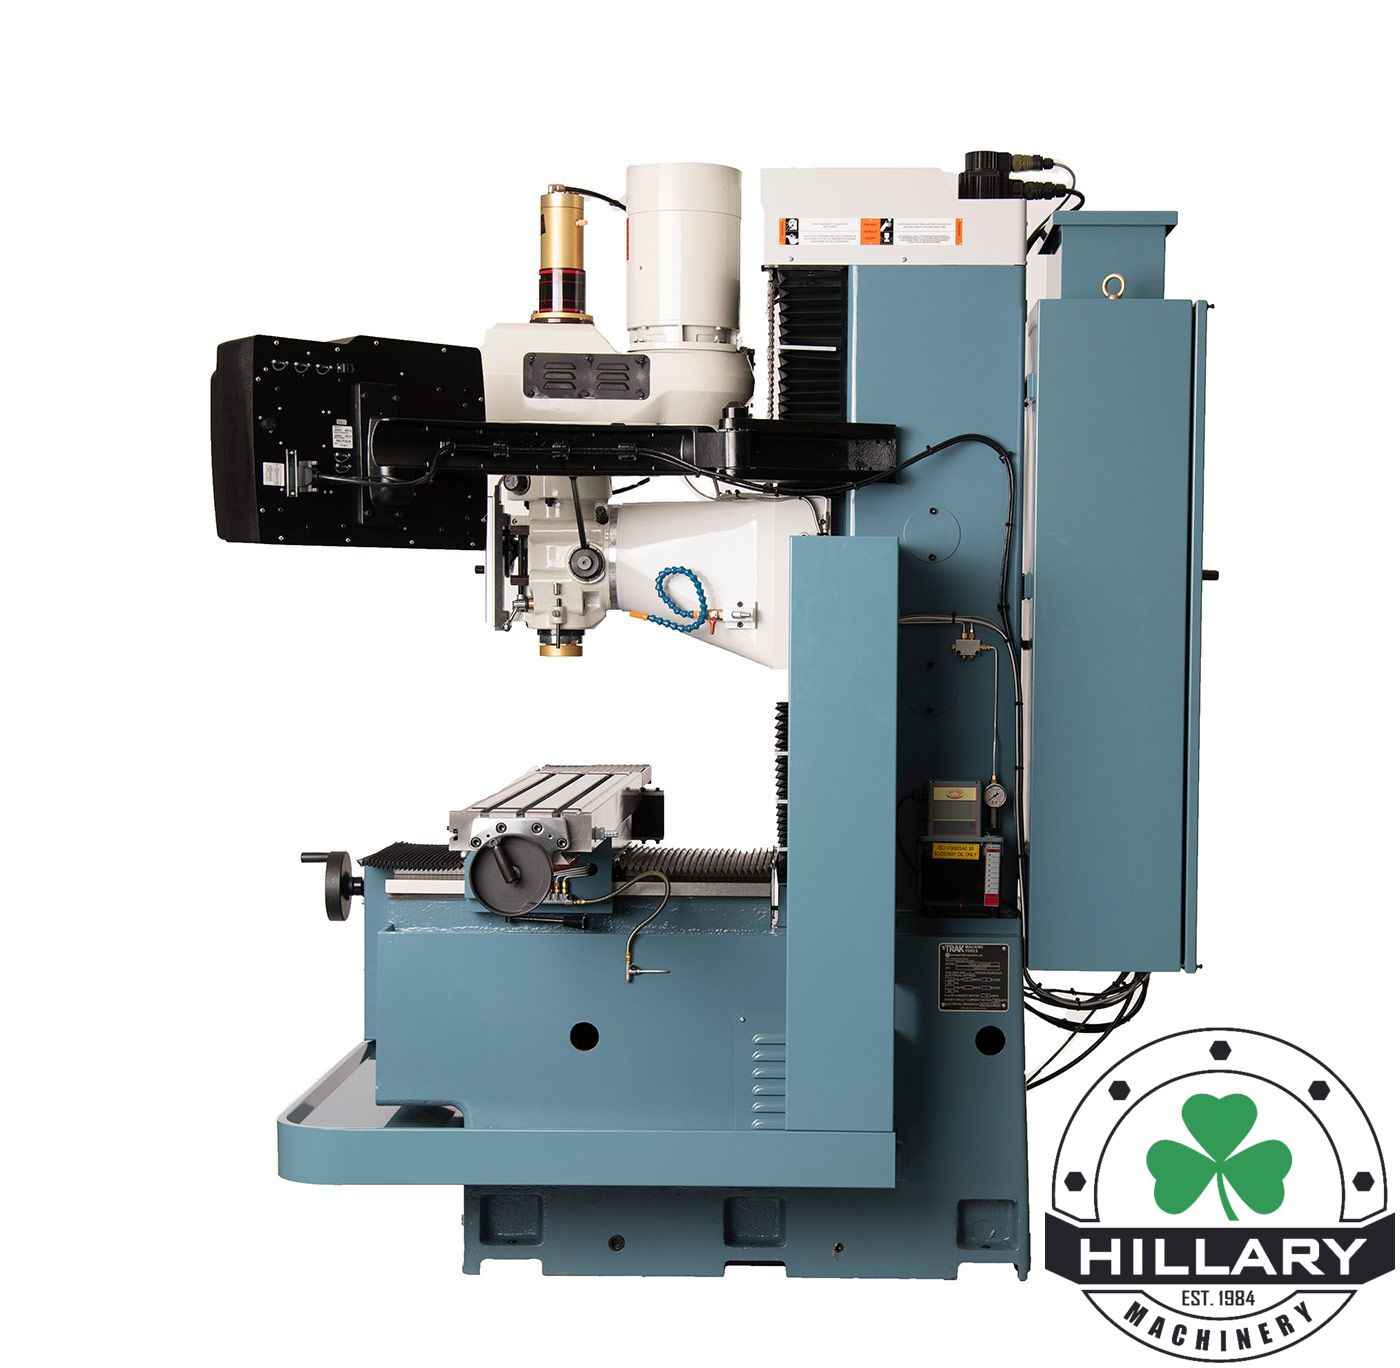 SOUTHWESTERN INDUSTRIES TRAK DPM RX3 Tool Room Mills | Hillary Machinery